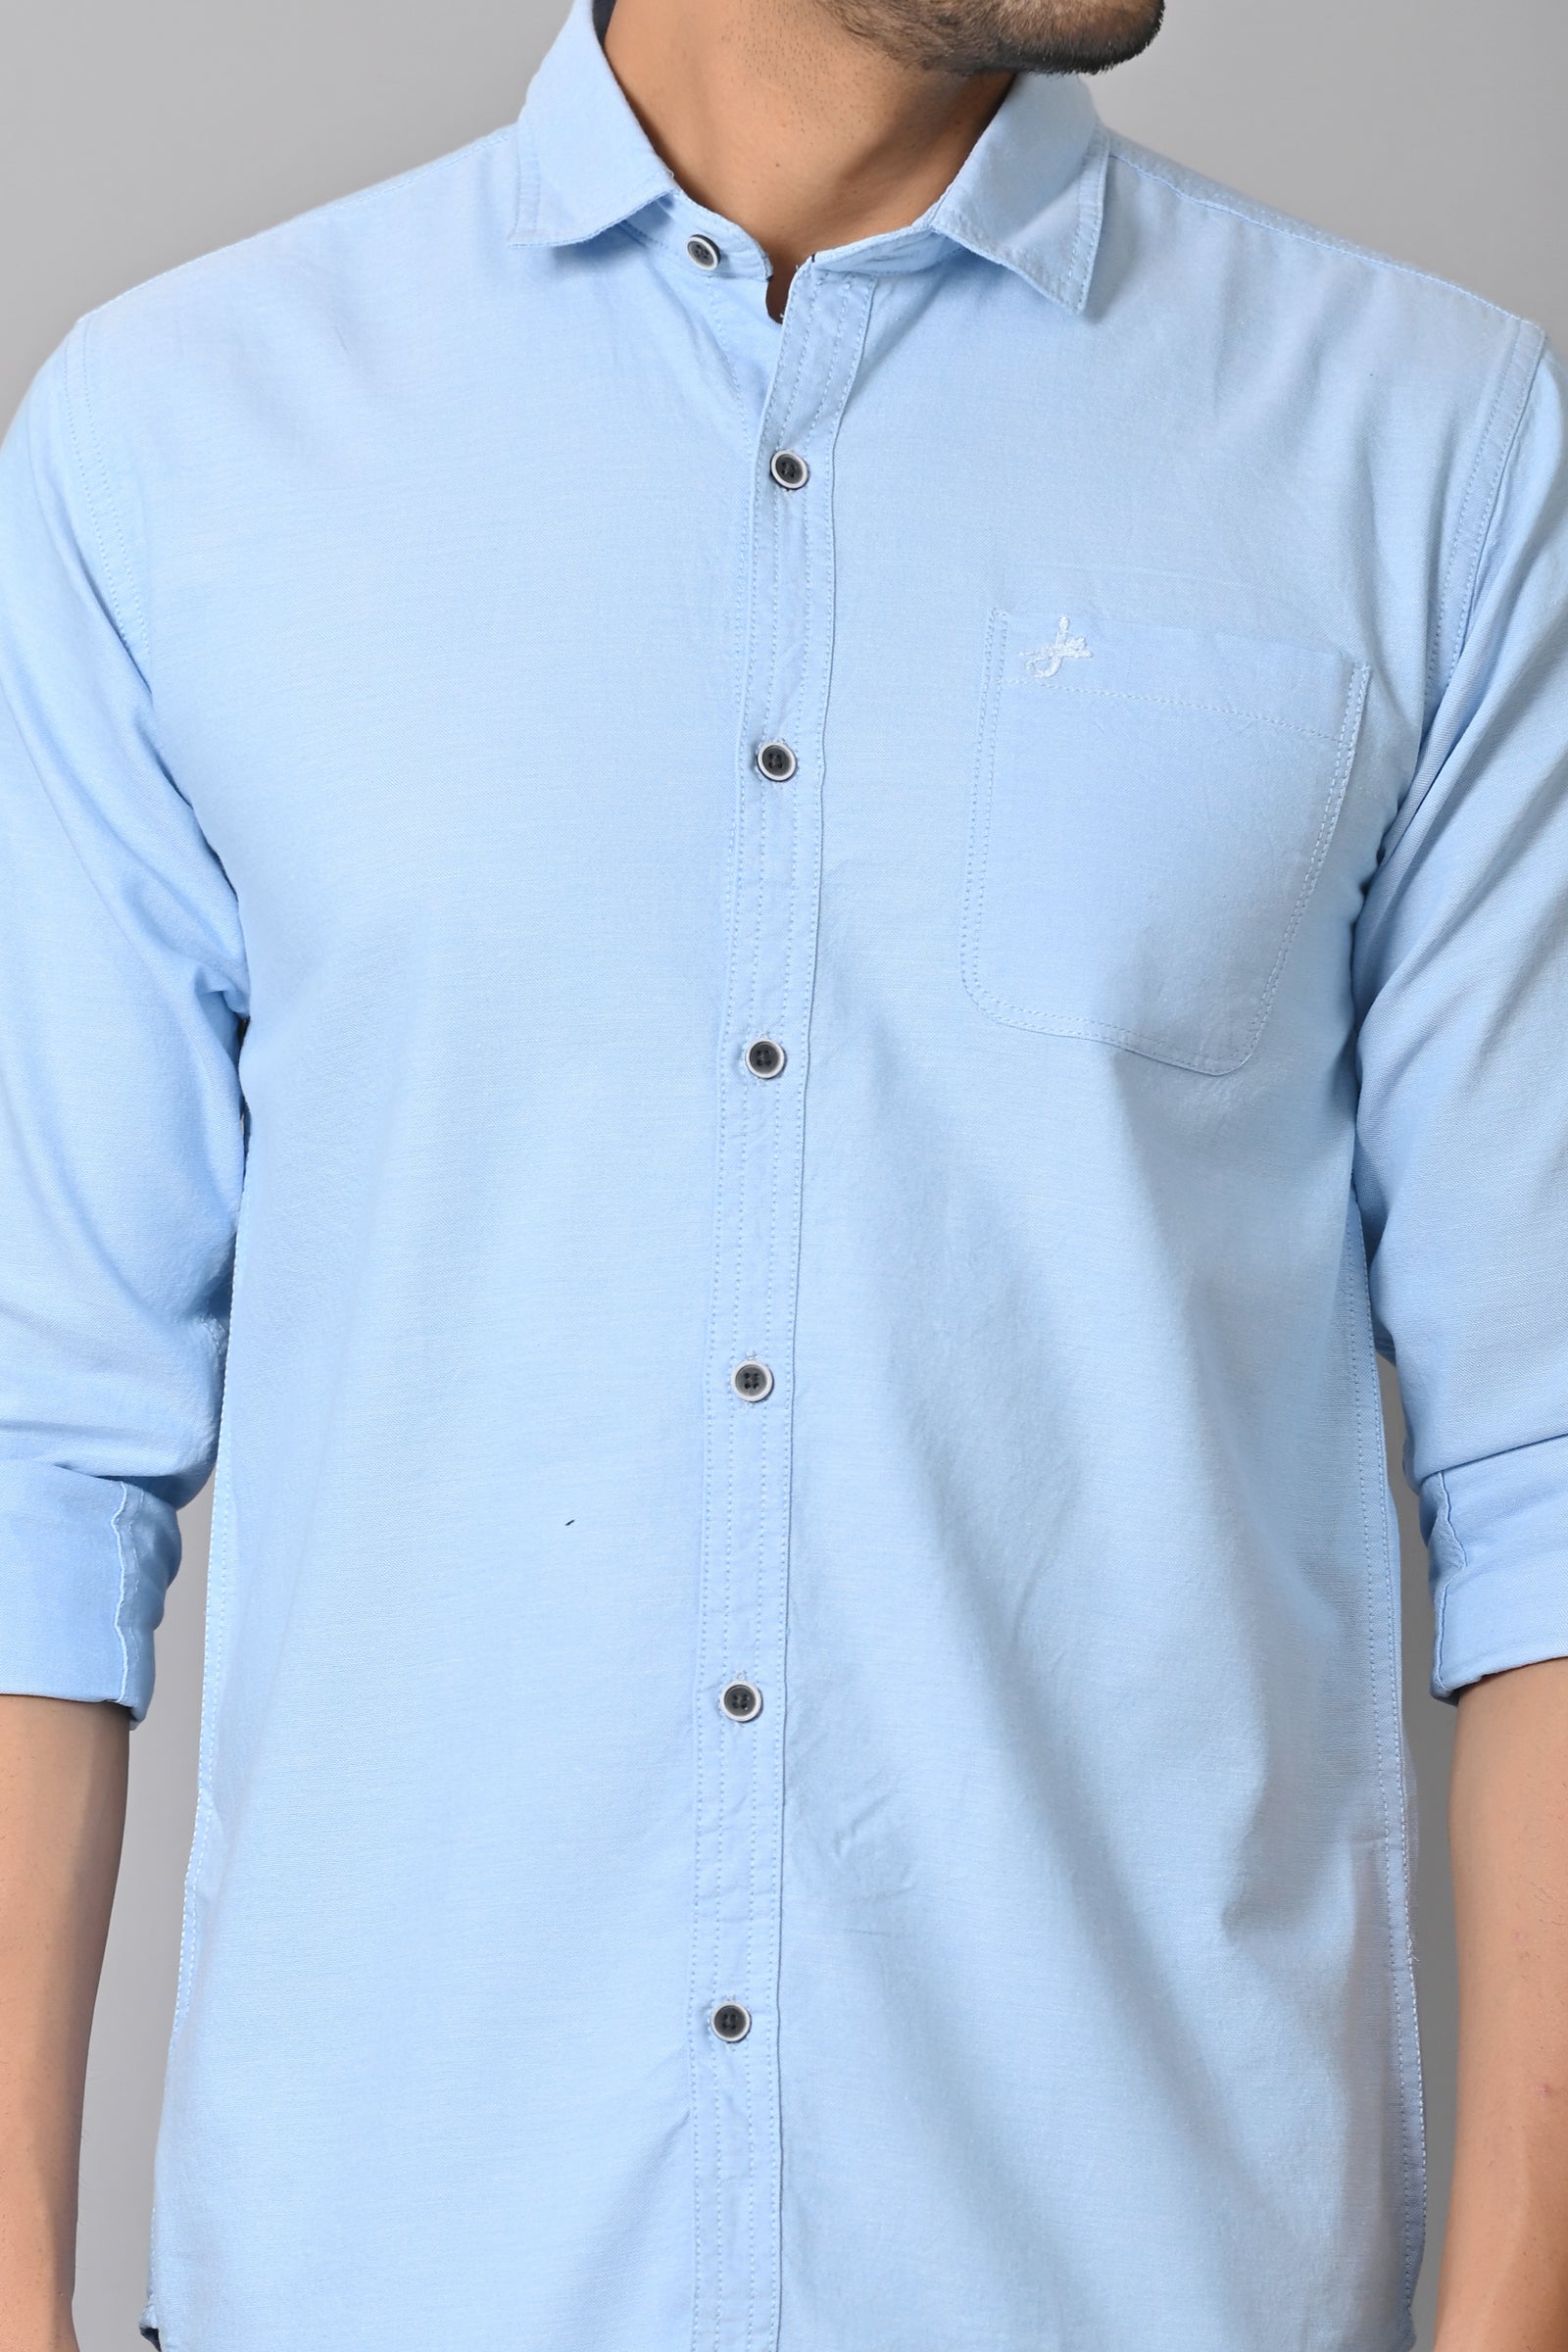 Jaguro Men's Formal Shirt Cotton  Sky Blue